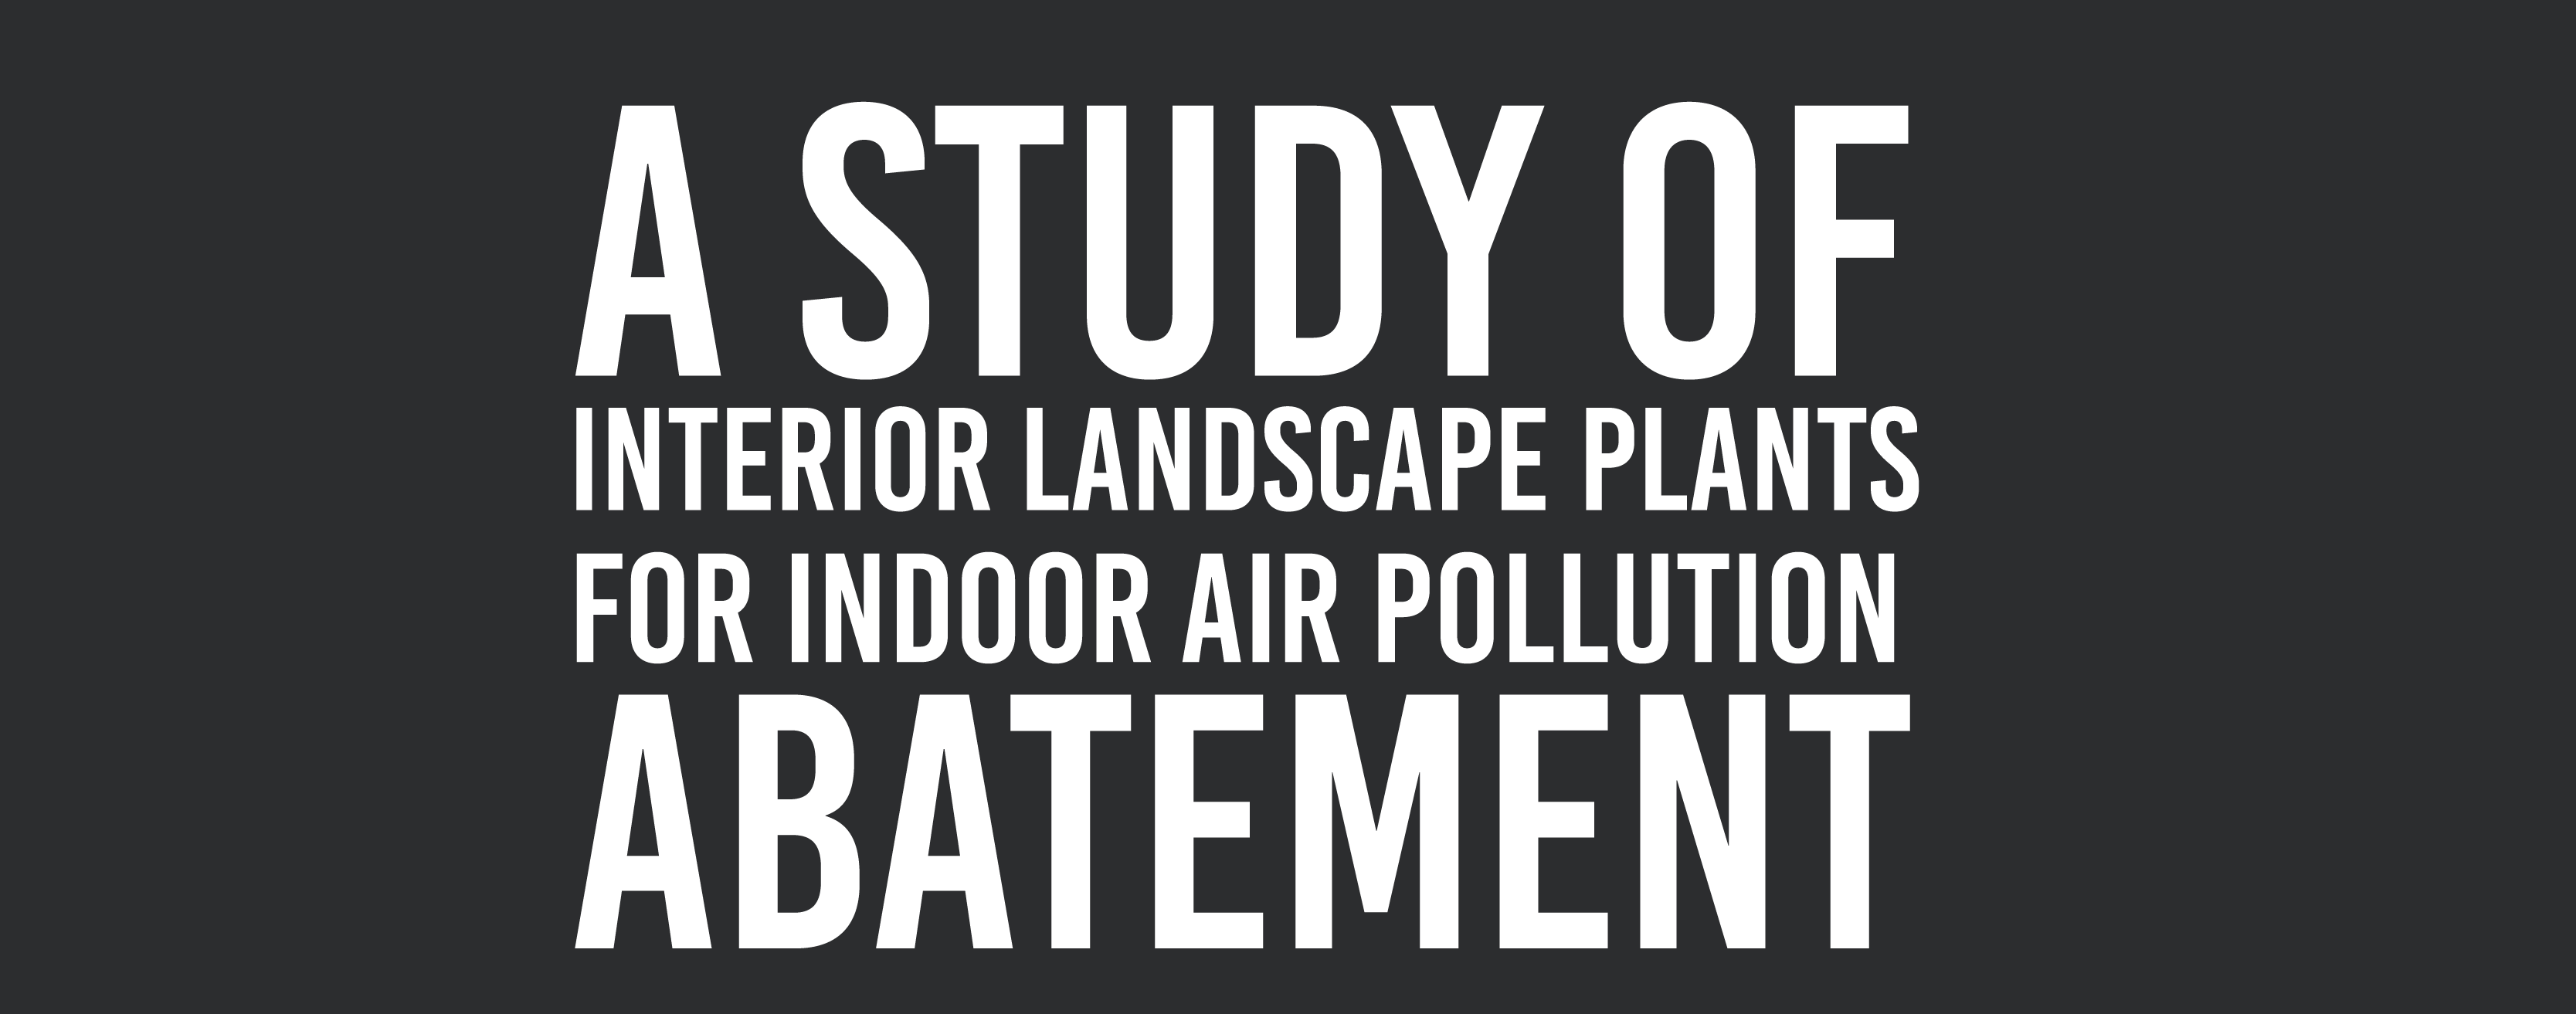 Interior Landscape Plants For Indoor, Interior Landscape Plants For Indoor Air Pollution Abatement